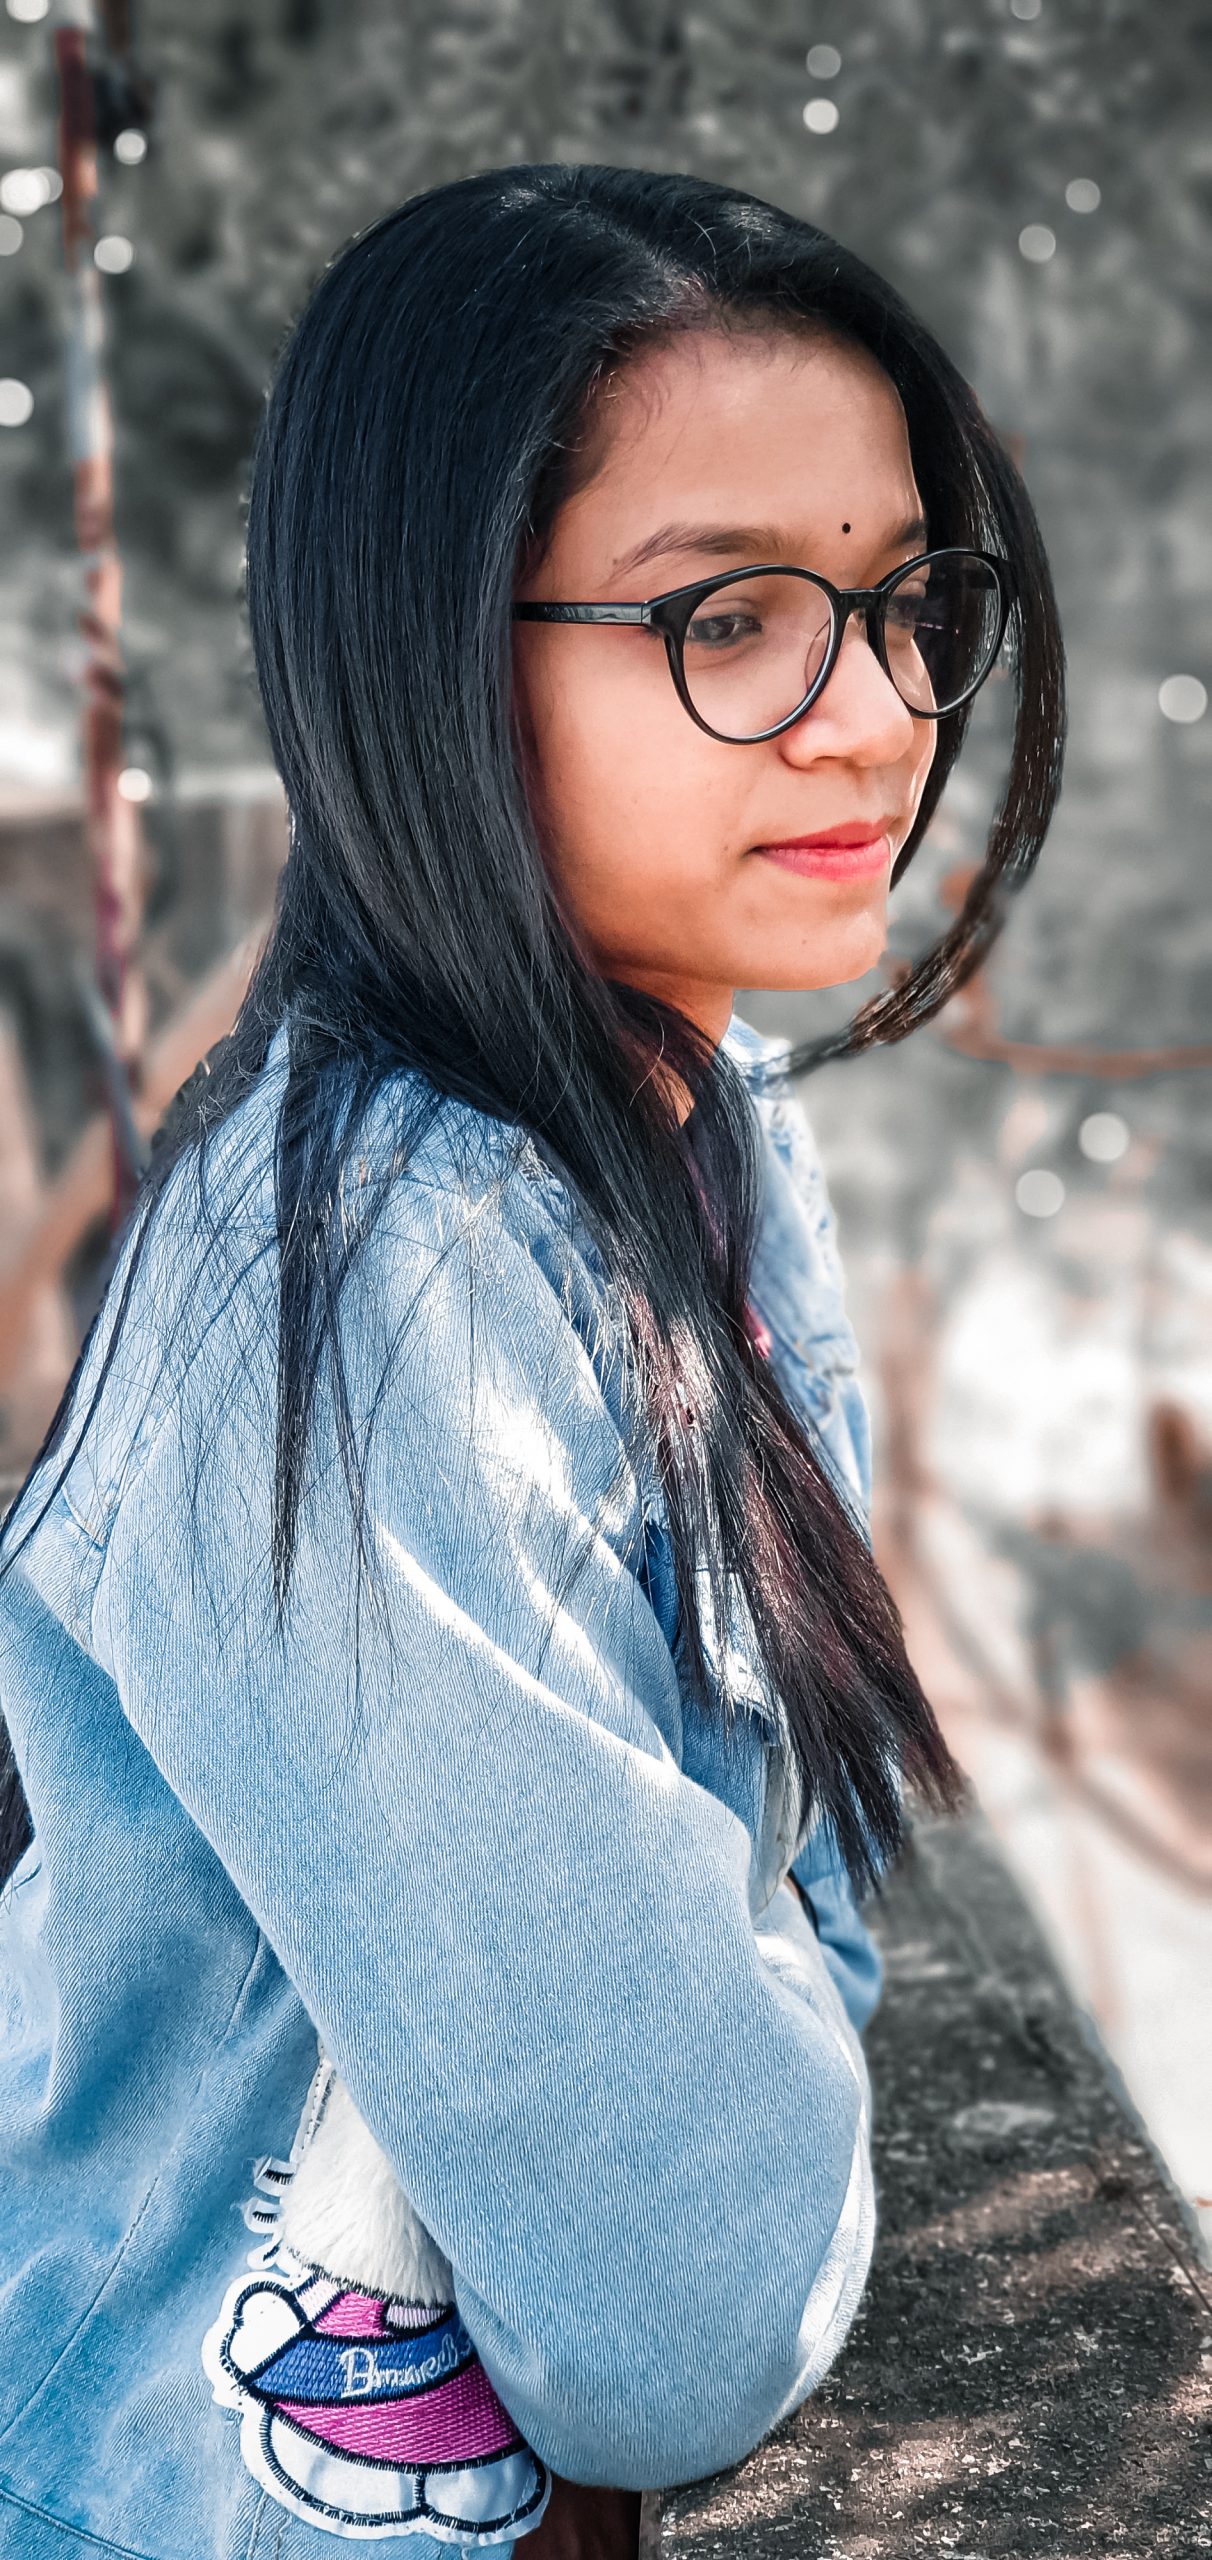 Girl posing near the wall in specs